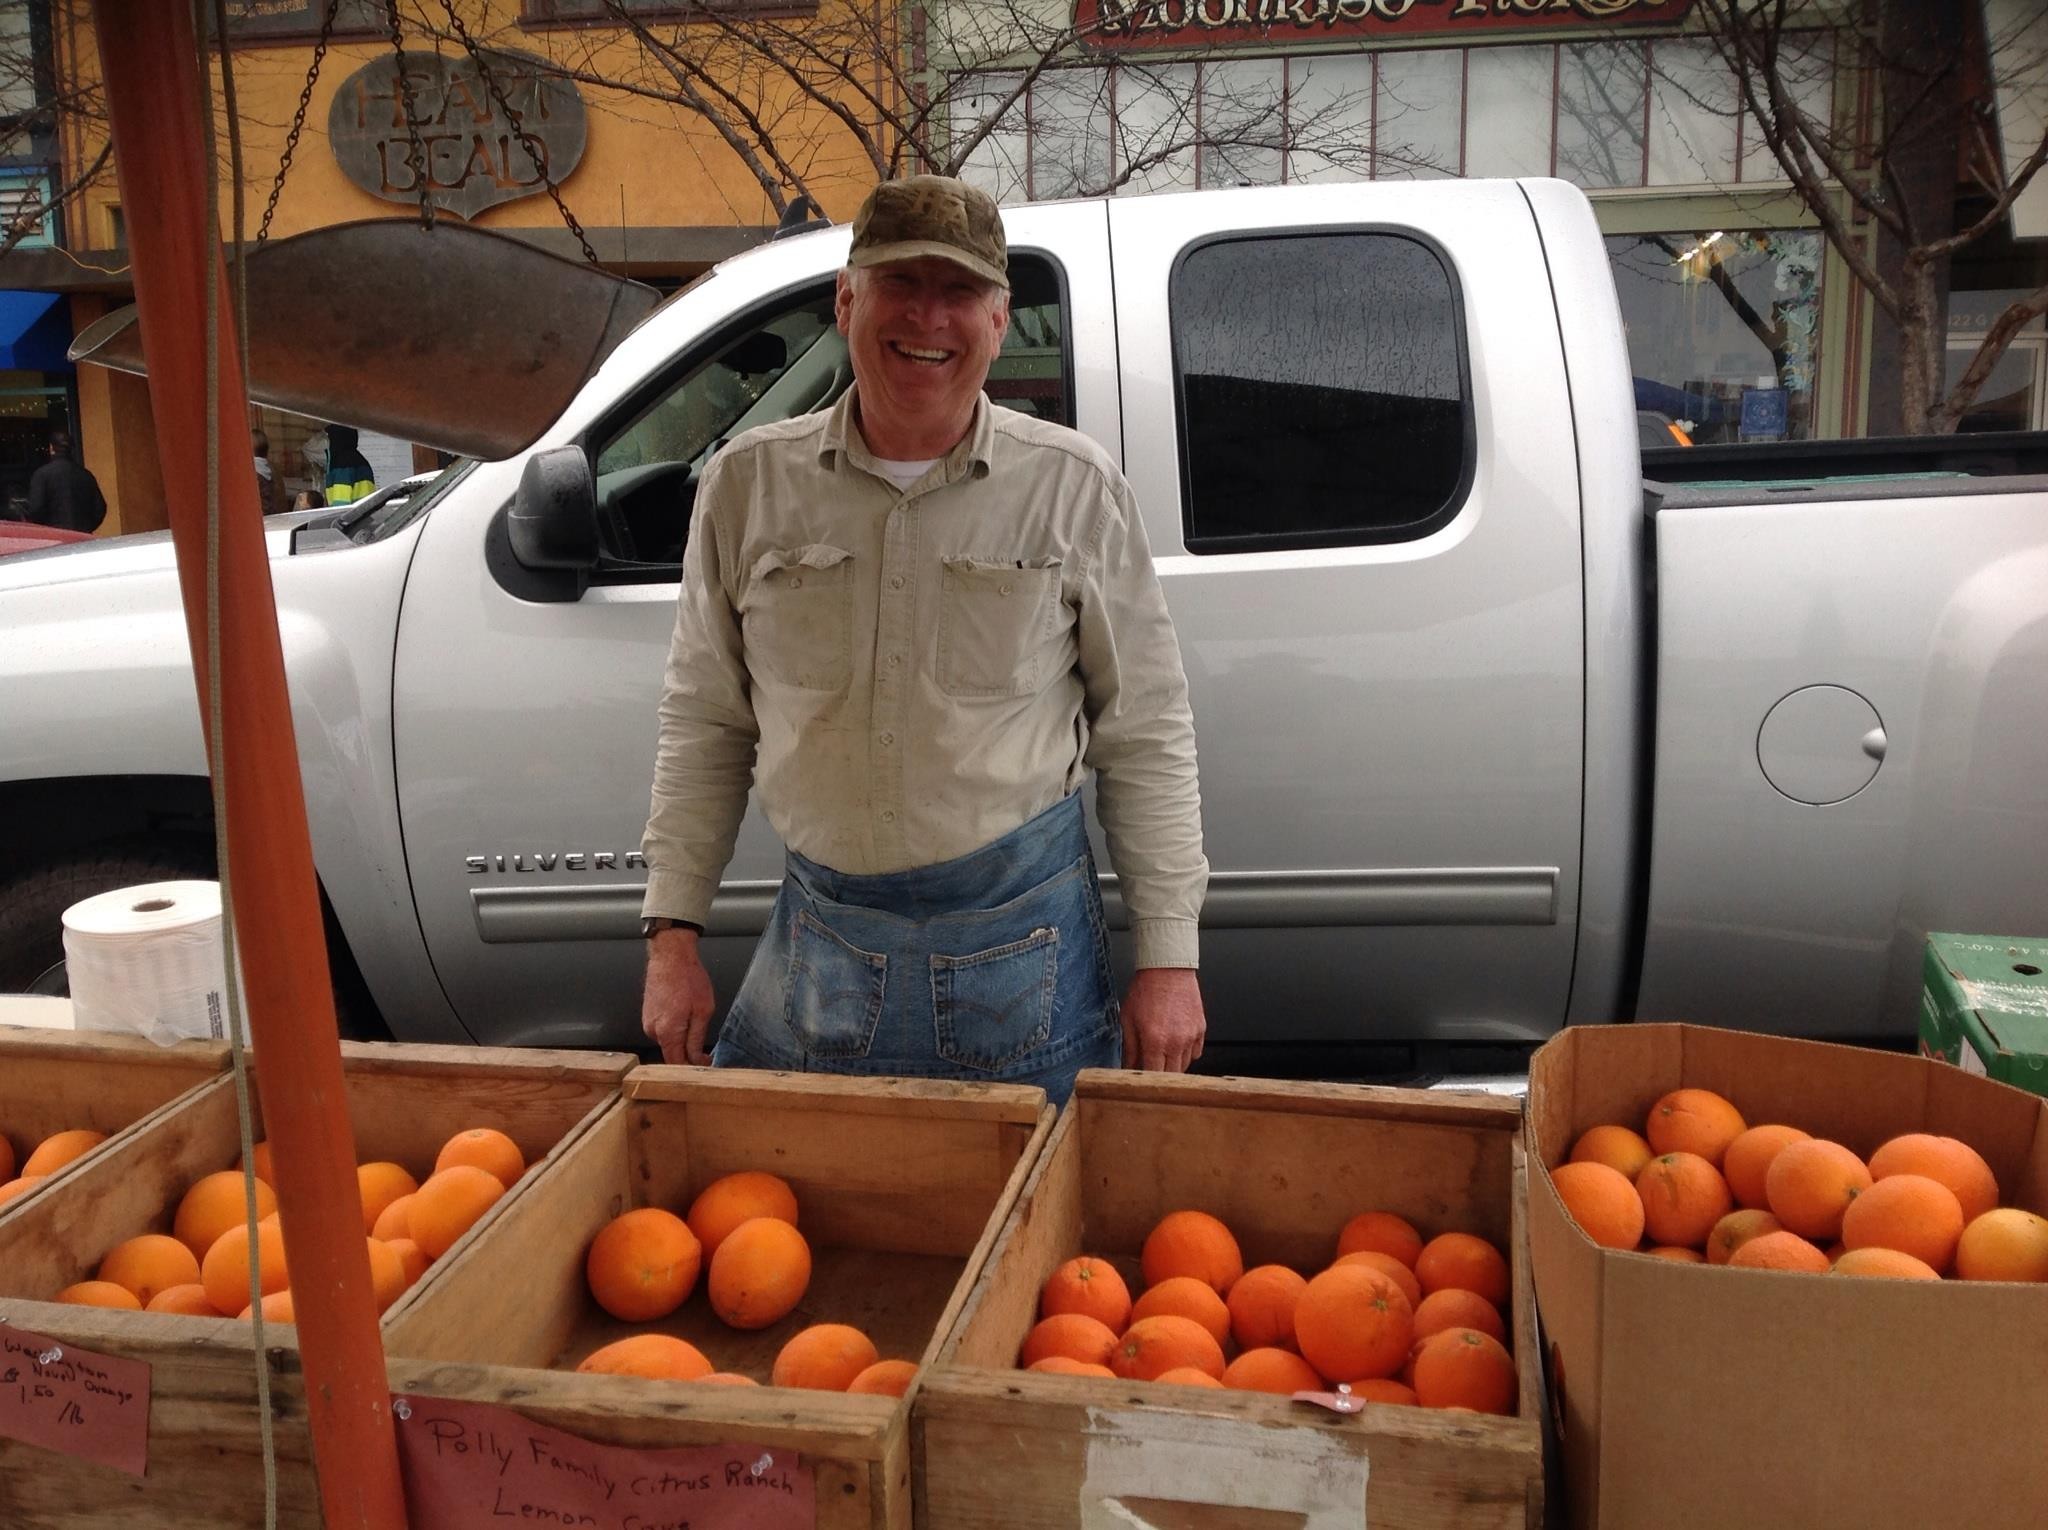 Jim Polly from Lemon Cove selling his family farm's citrus at the Arcata Winter Market. - PHOTO BY BOB DORAN